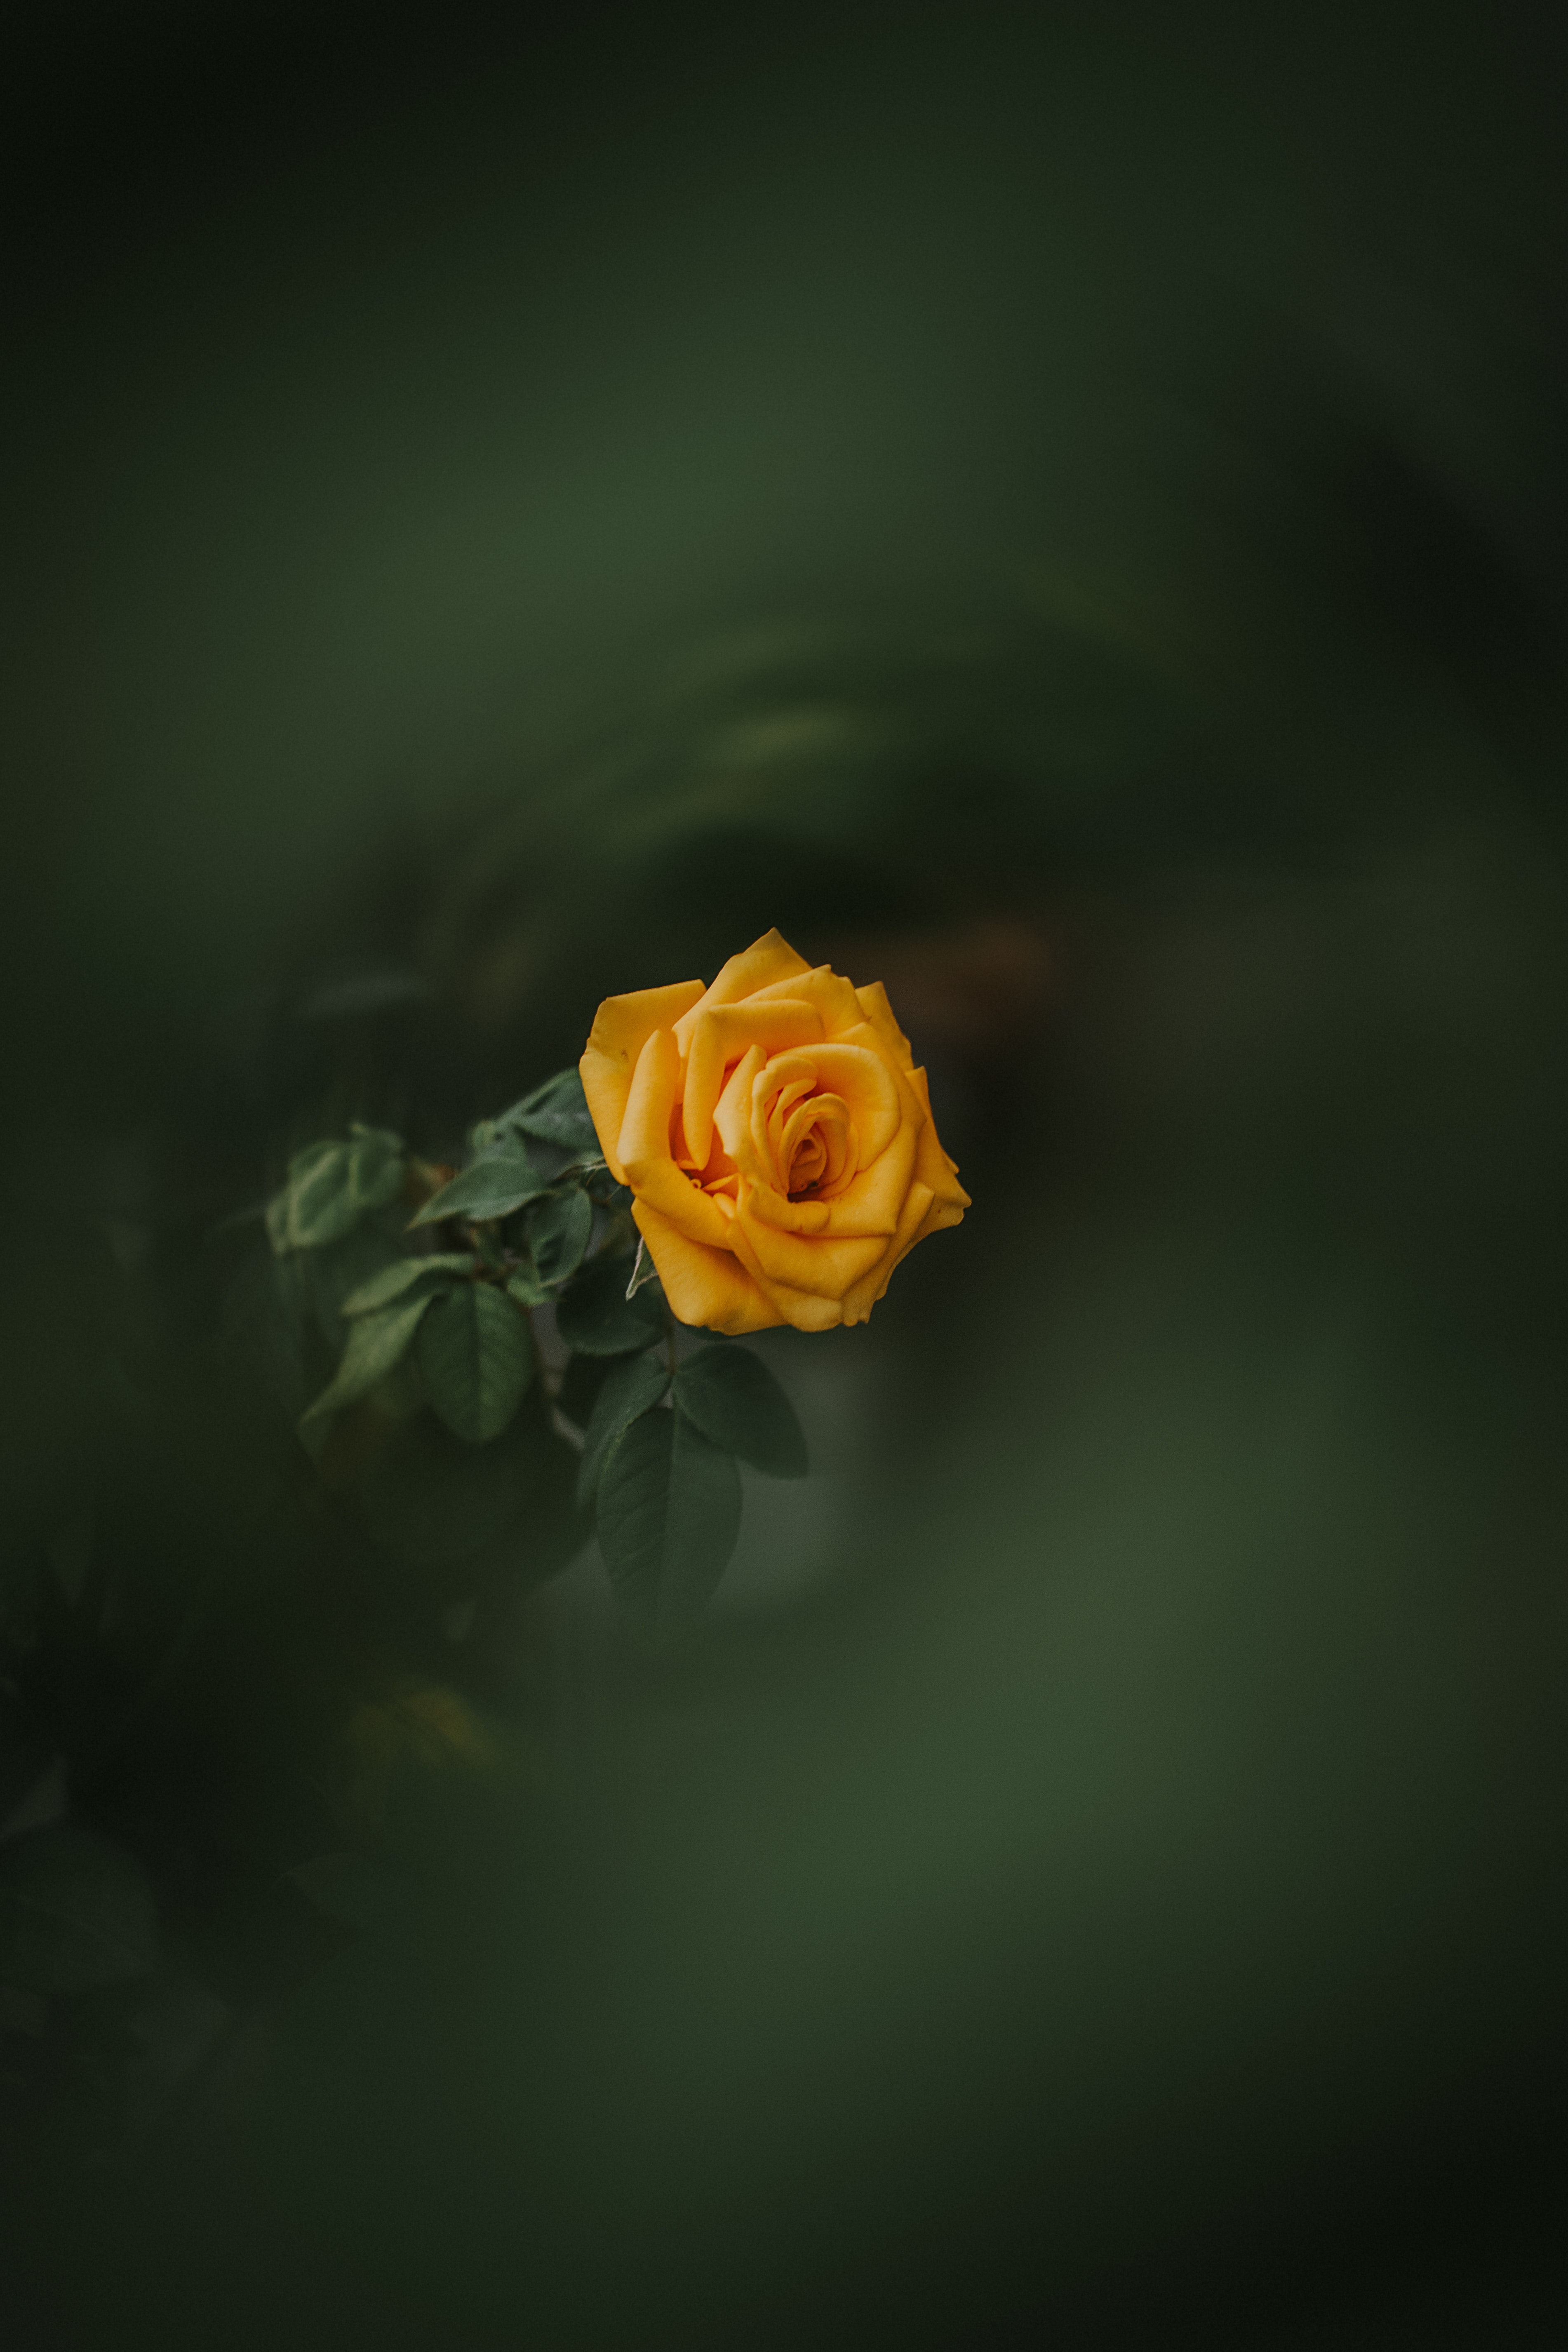 rose, rose flower, green, flowers, yellow, bud, blur, smooth, garden UHD